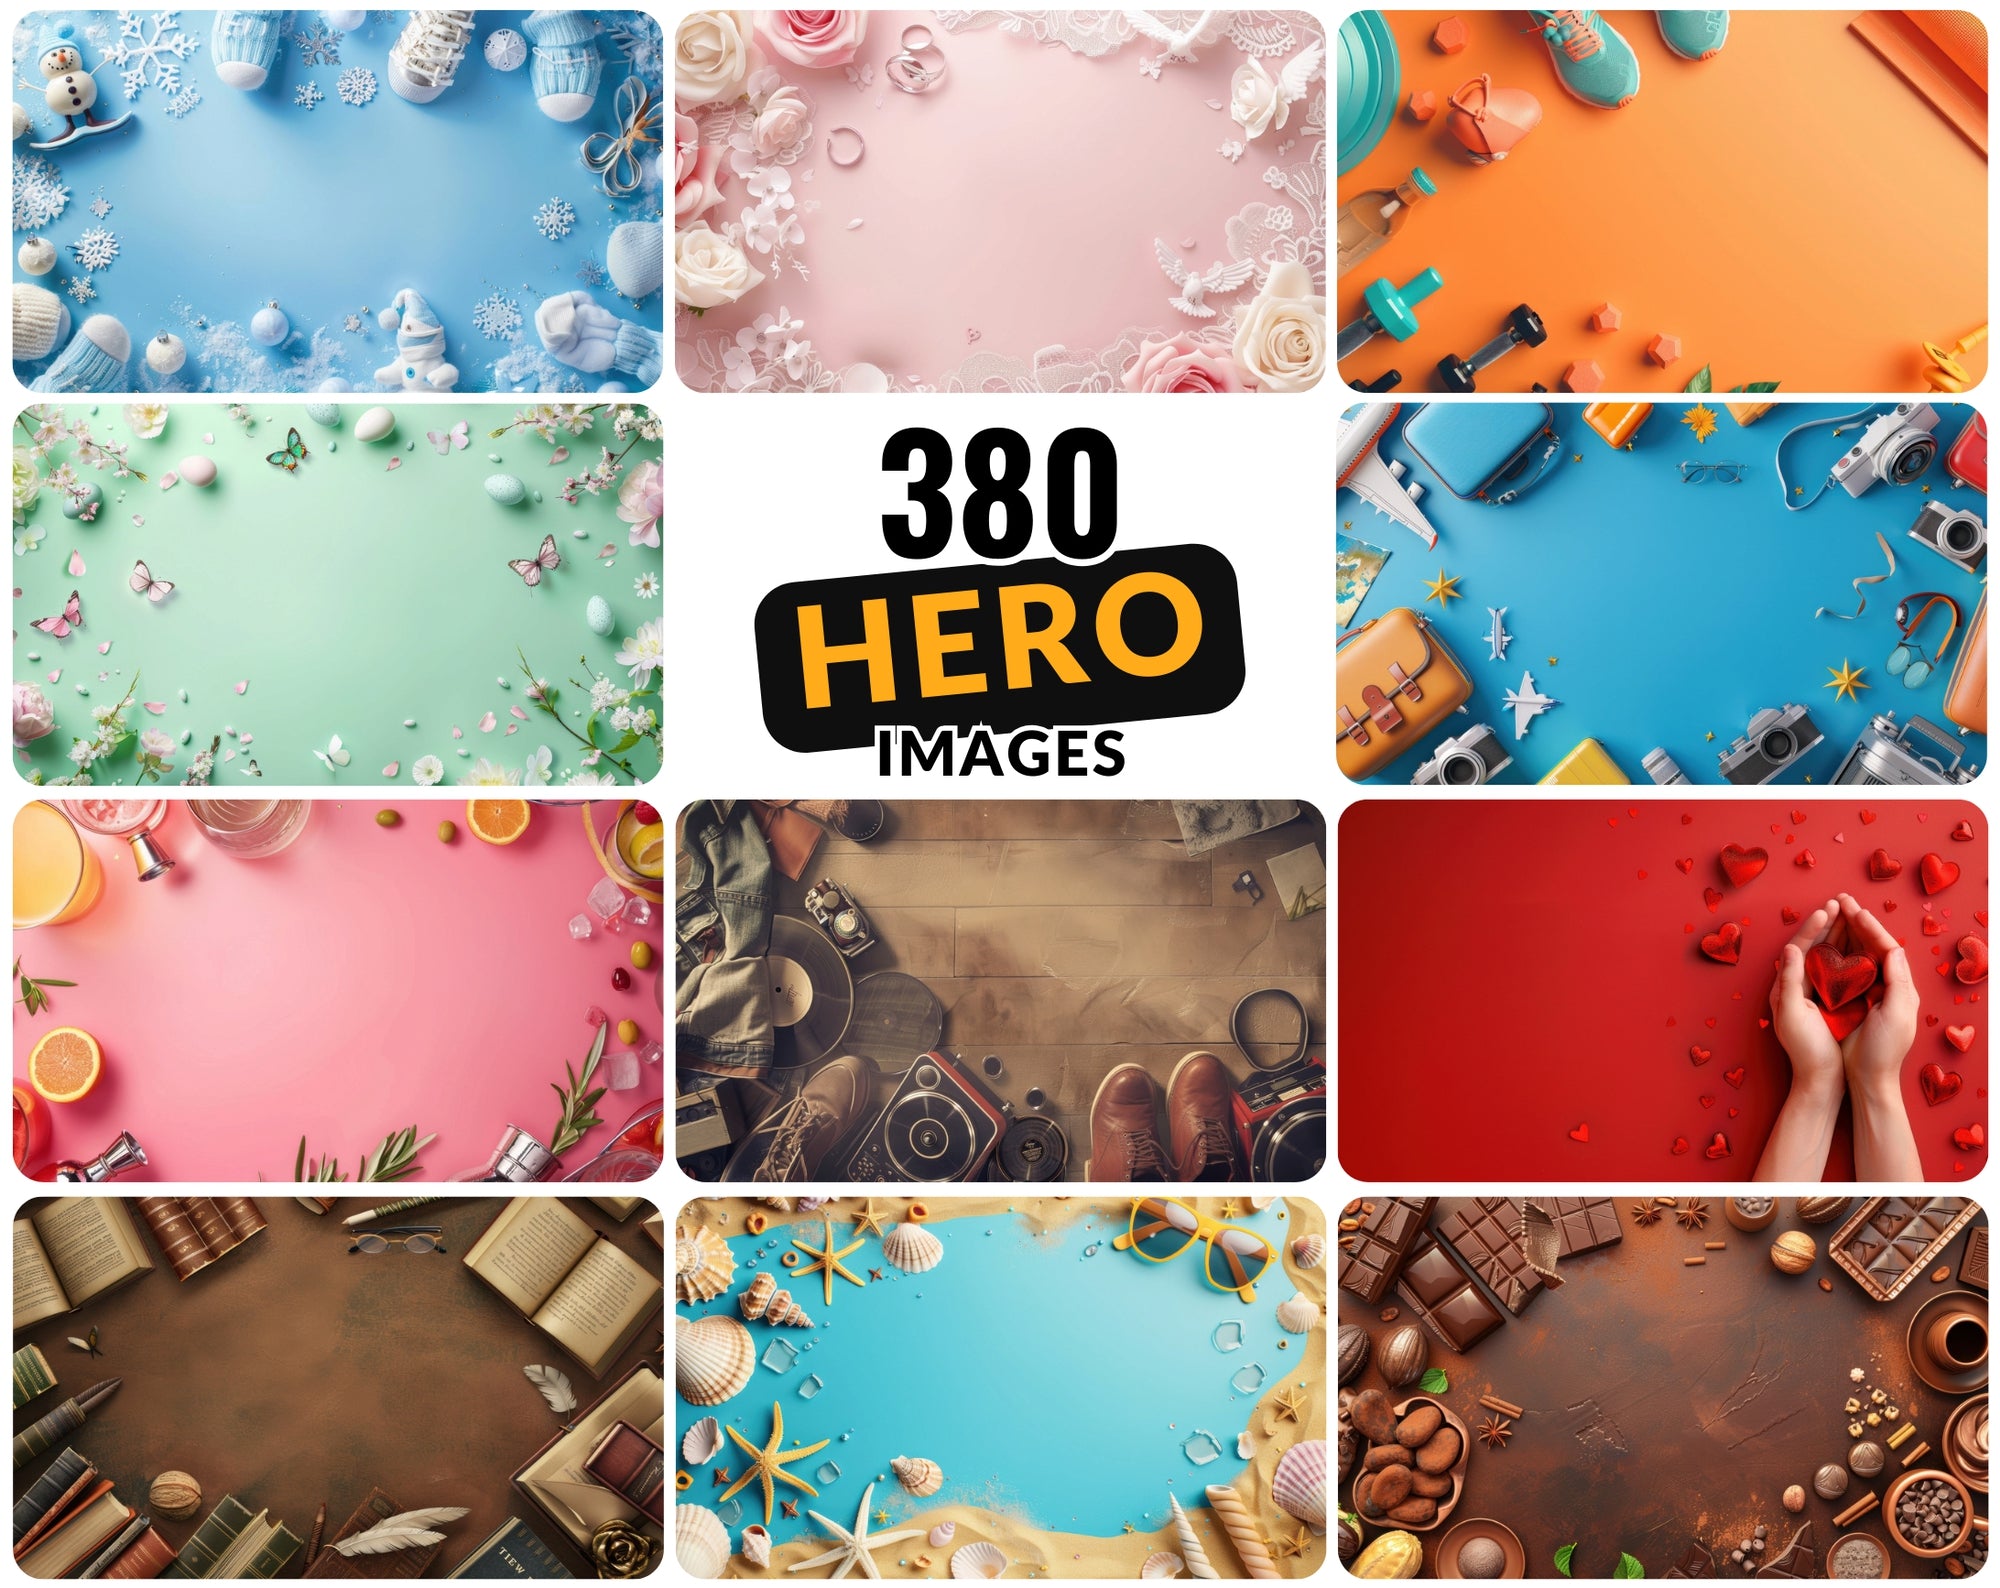 380 Vibrant Hero Images for Websites | Commercial License